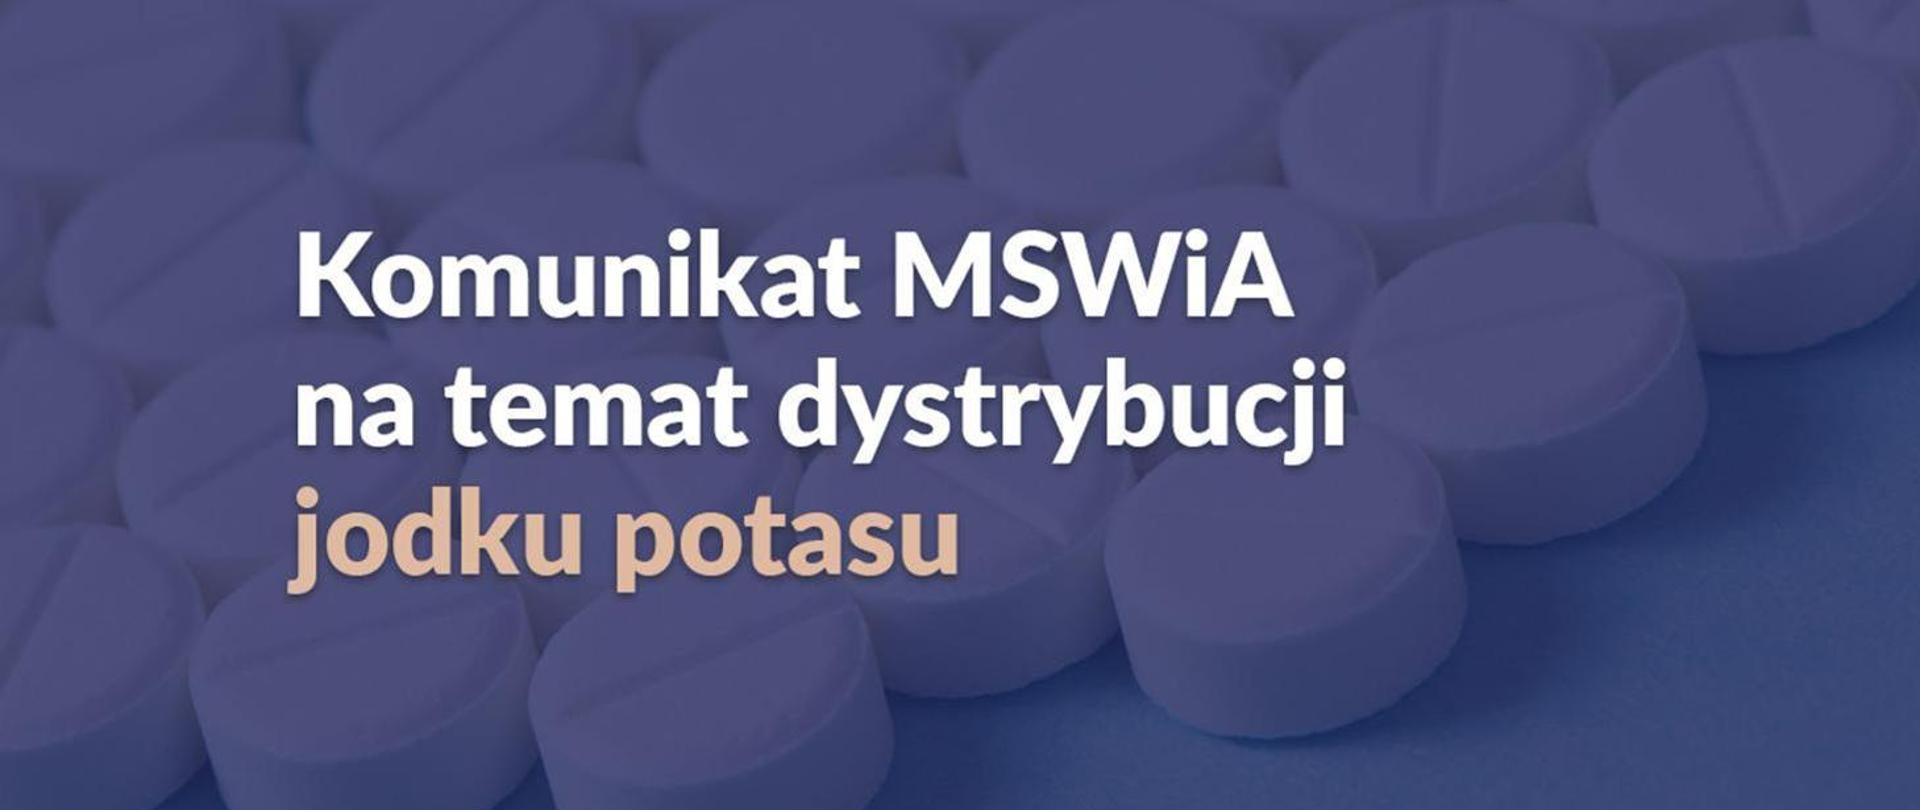 Napis "Komunikat MSWiA na temat dystrybucji jodku potasu" na tle tabletek